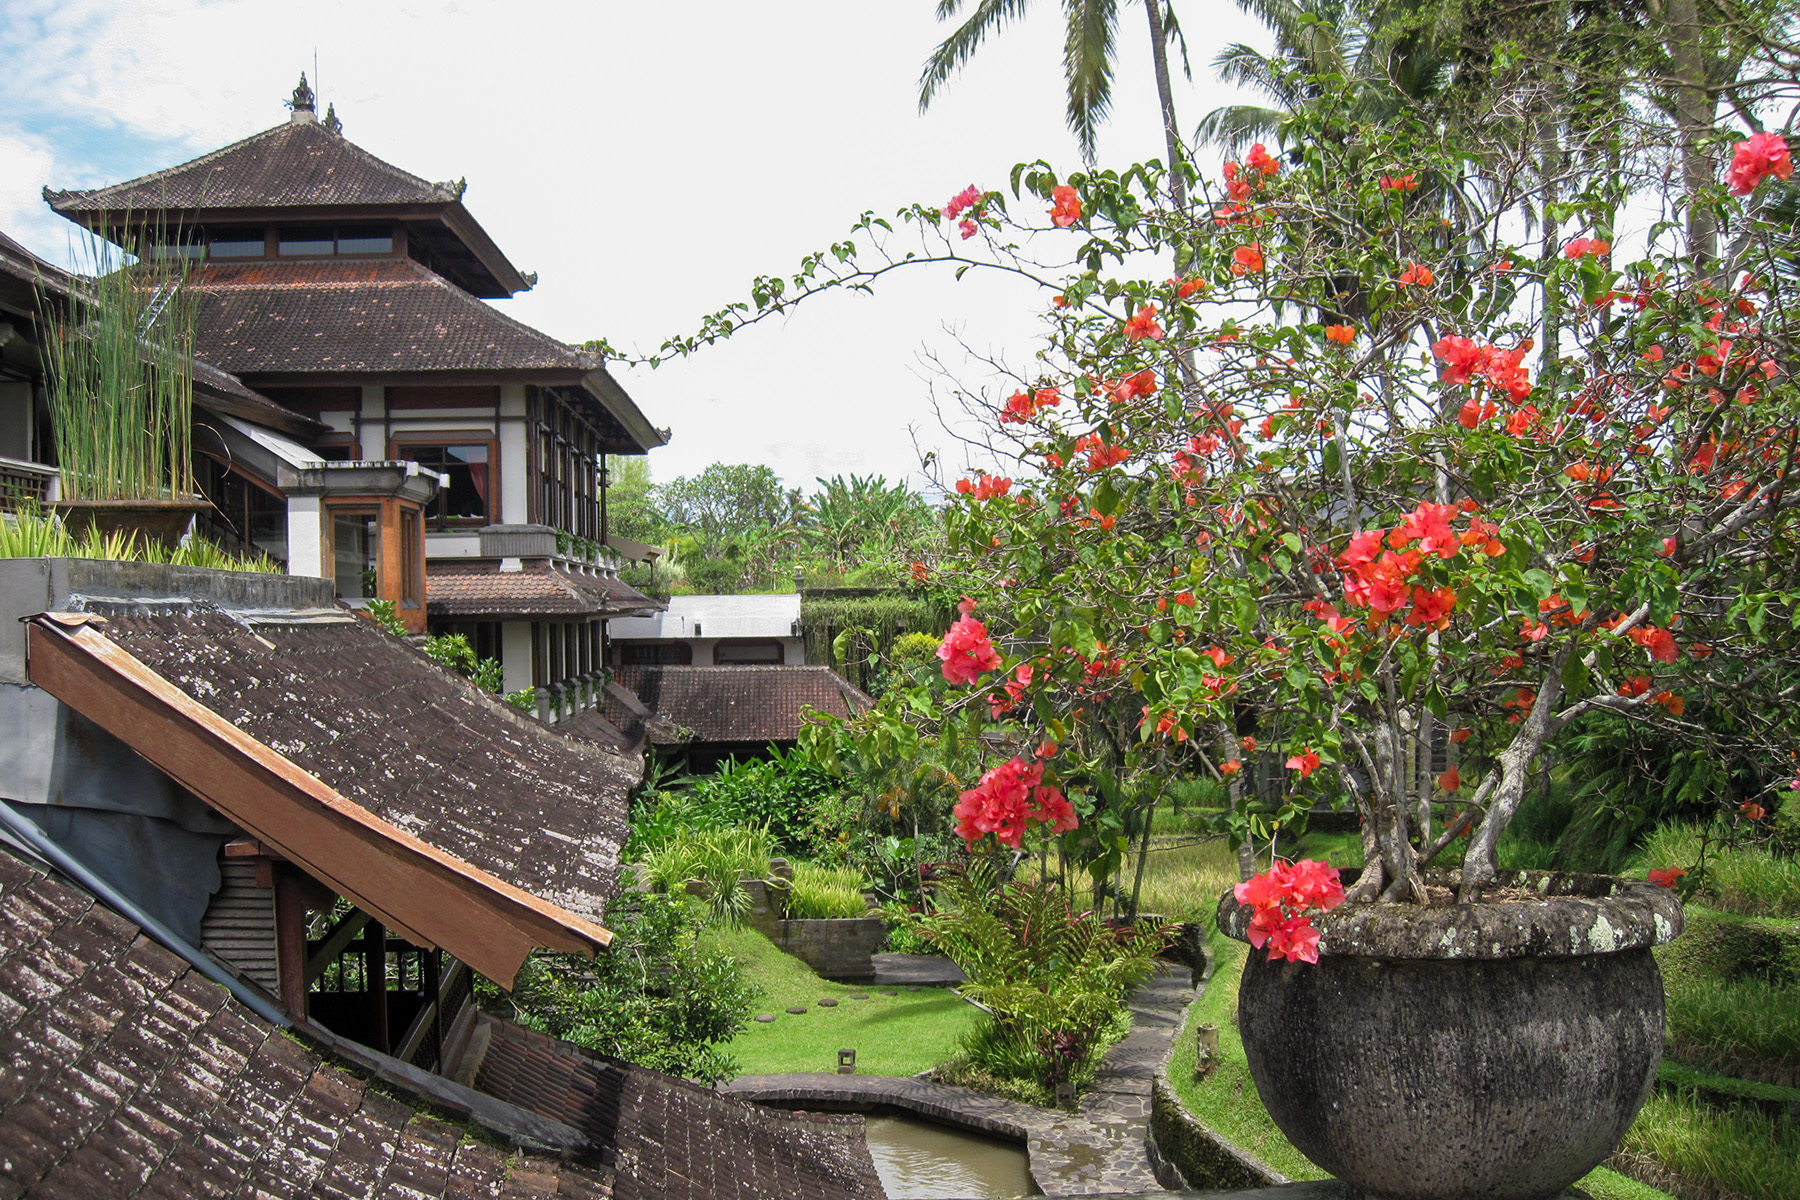 kamandalu-ubud-resort-roofs